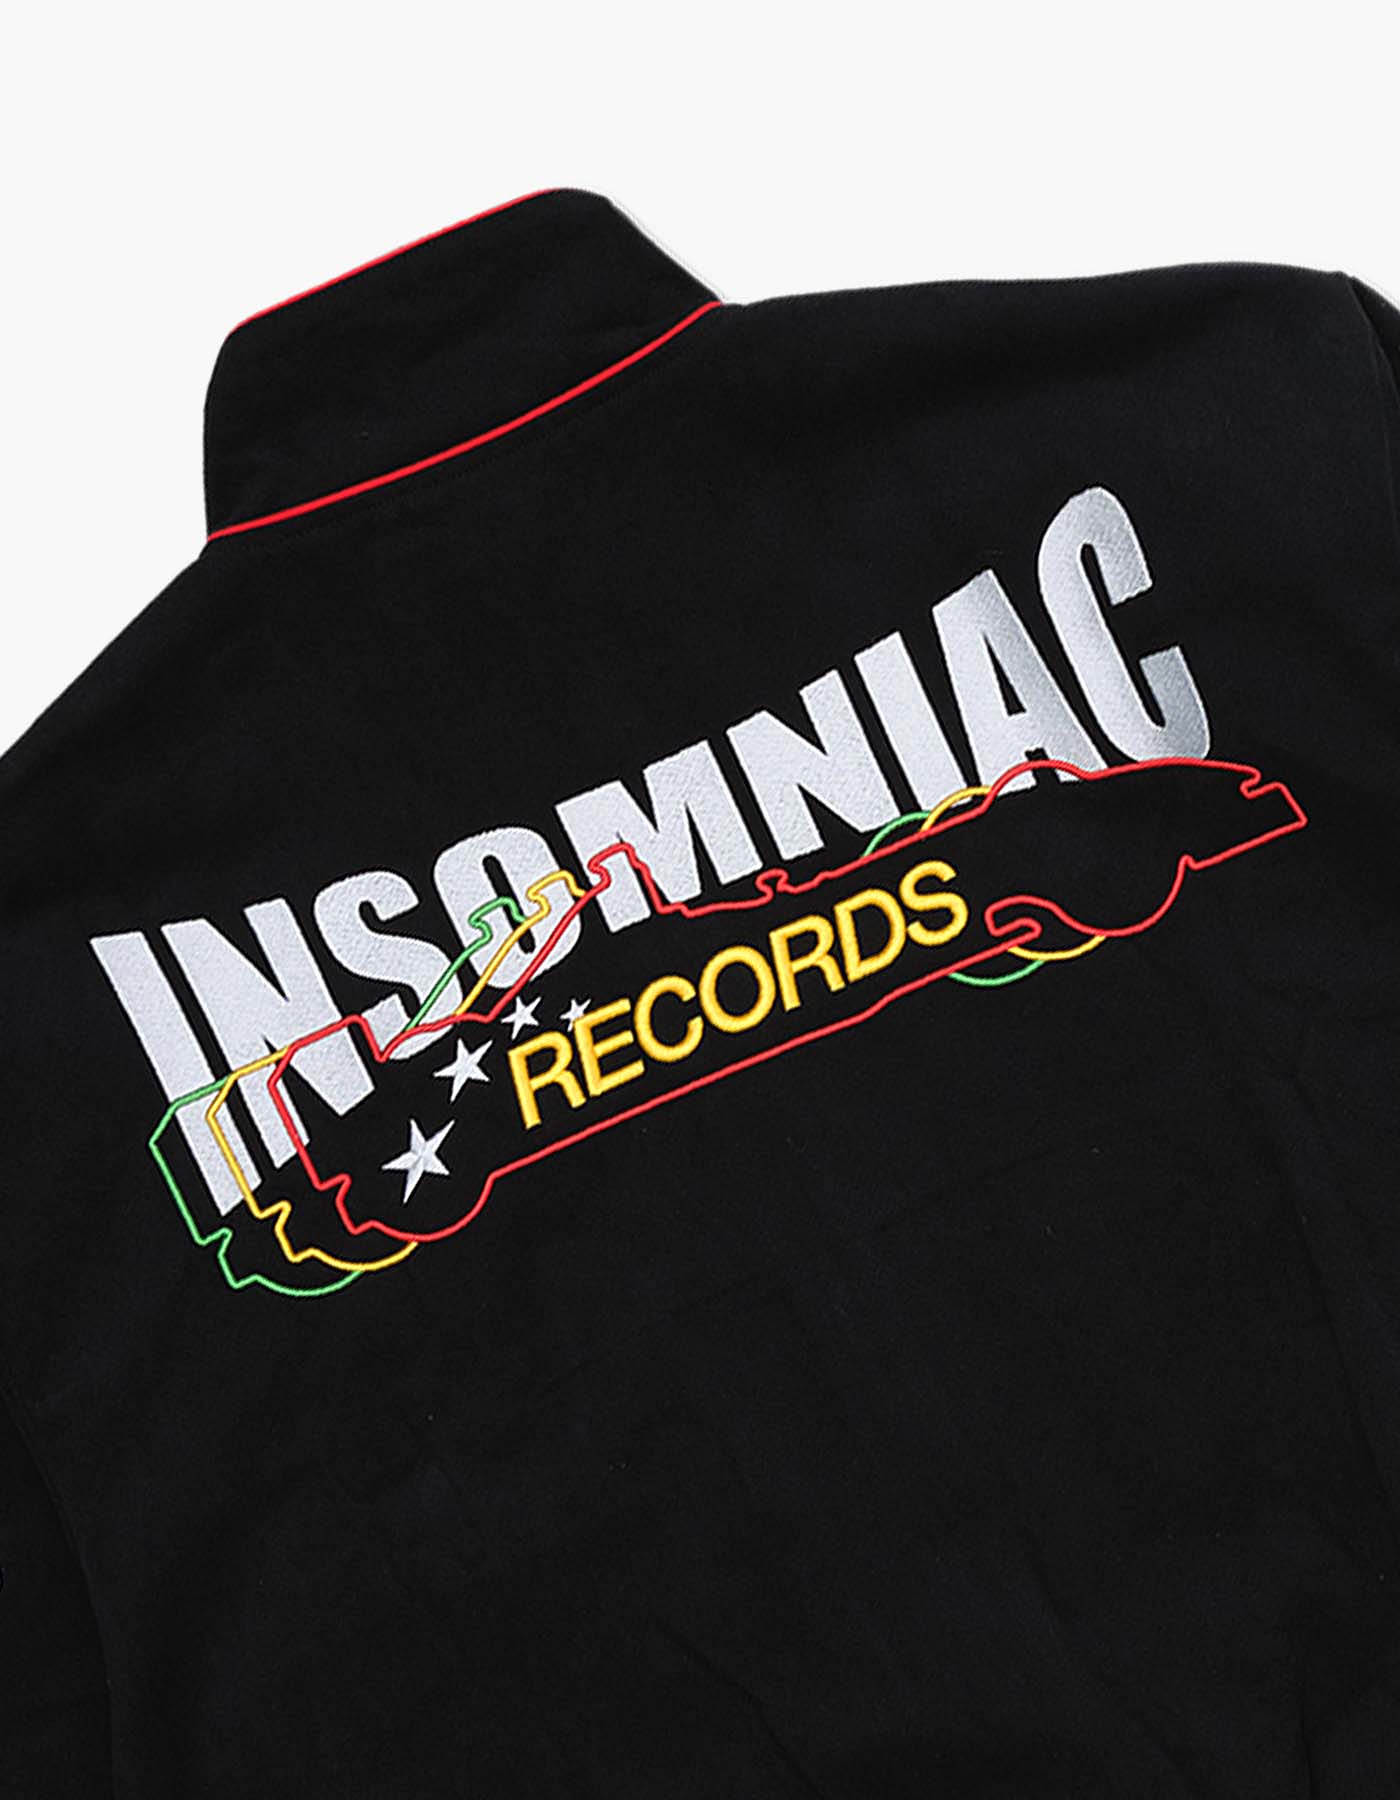 Insomniac Records EDC Race Jacket